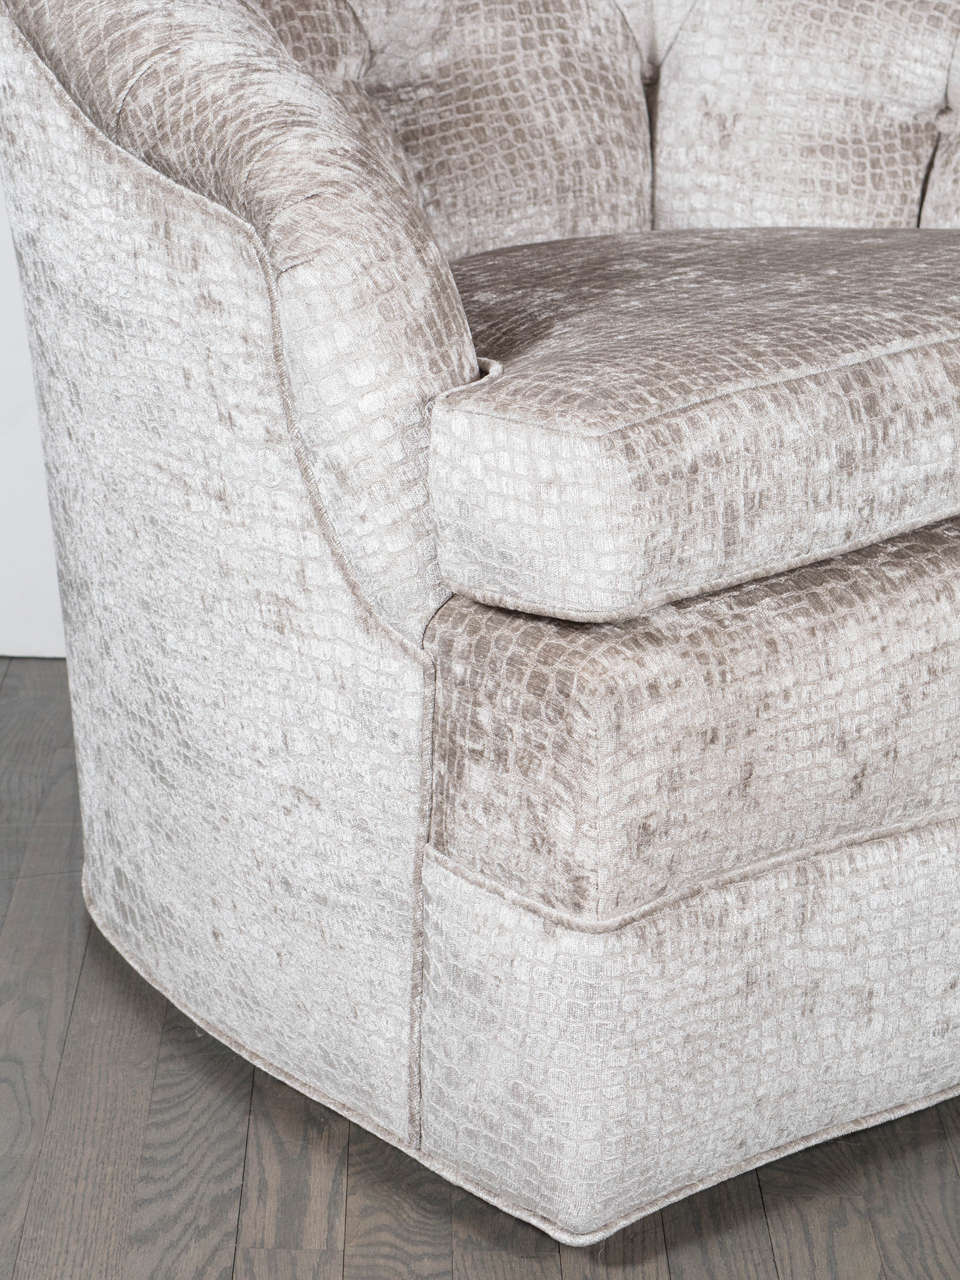 American Mid-Century Modern Tufted Button Back Swivel Chair in Platinum Gauffraged Velvet For Sale